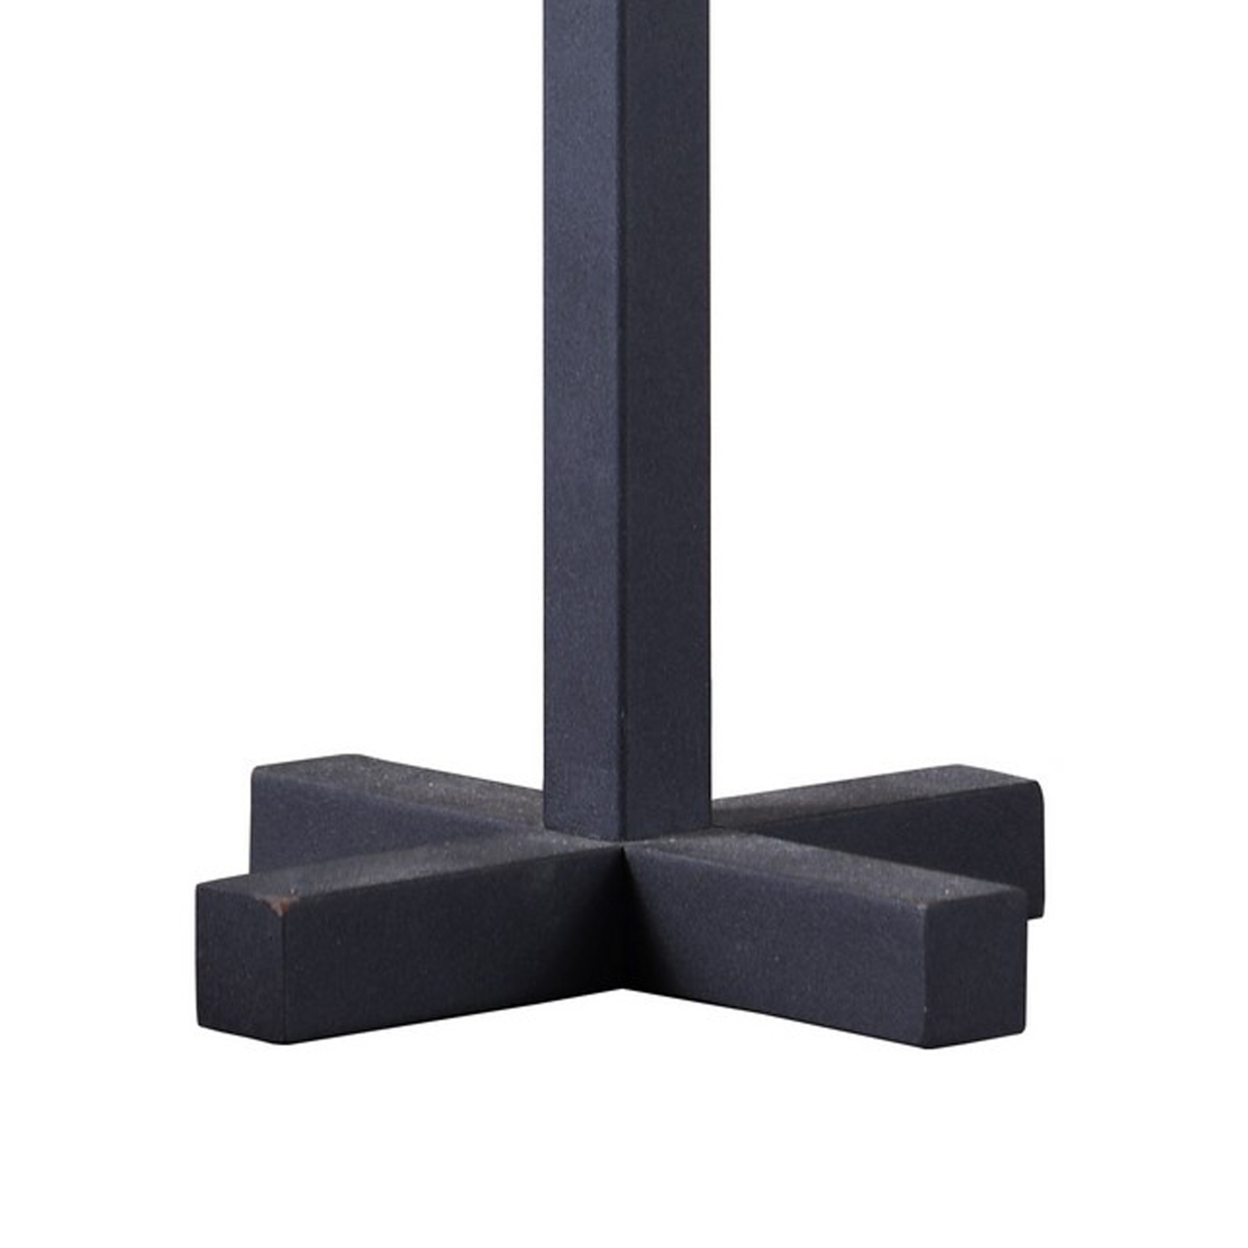 Table Lamp With Metal Cross Legged Base, Black- Saltoro Sherpi